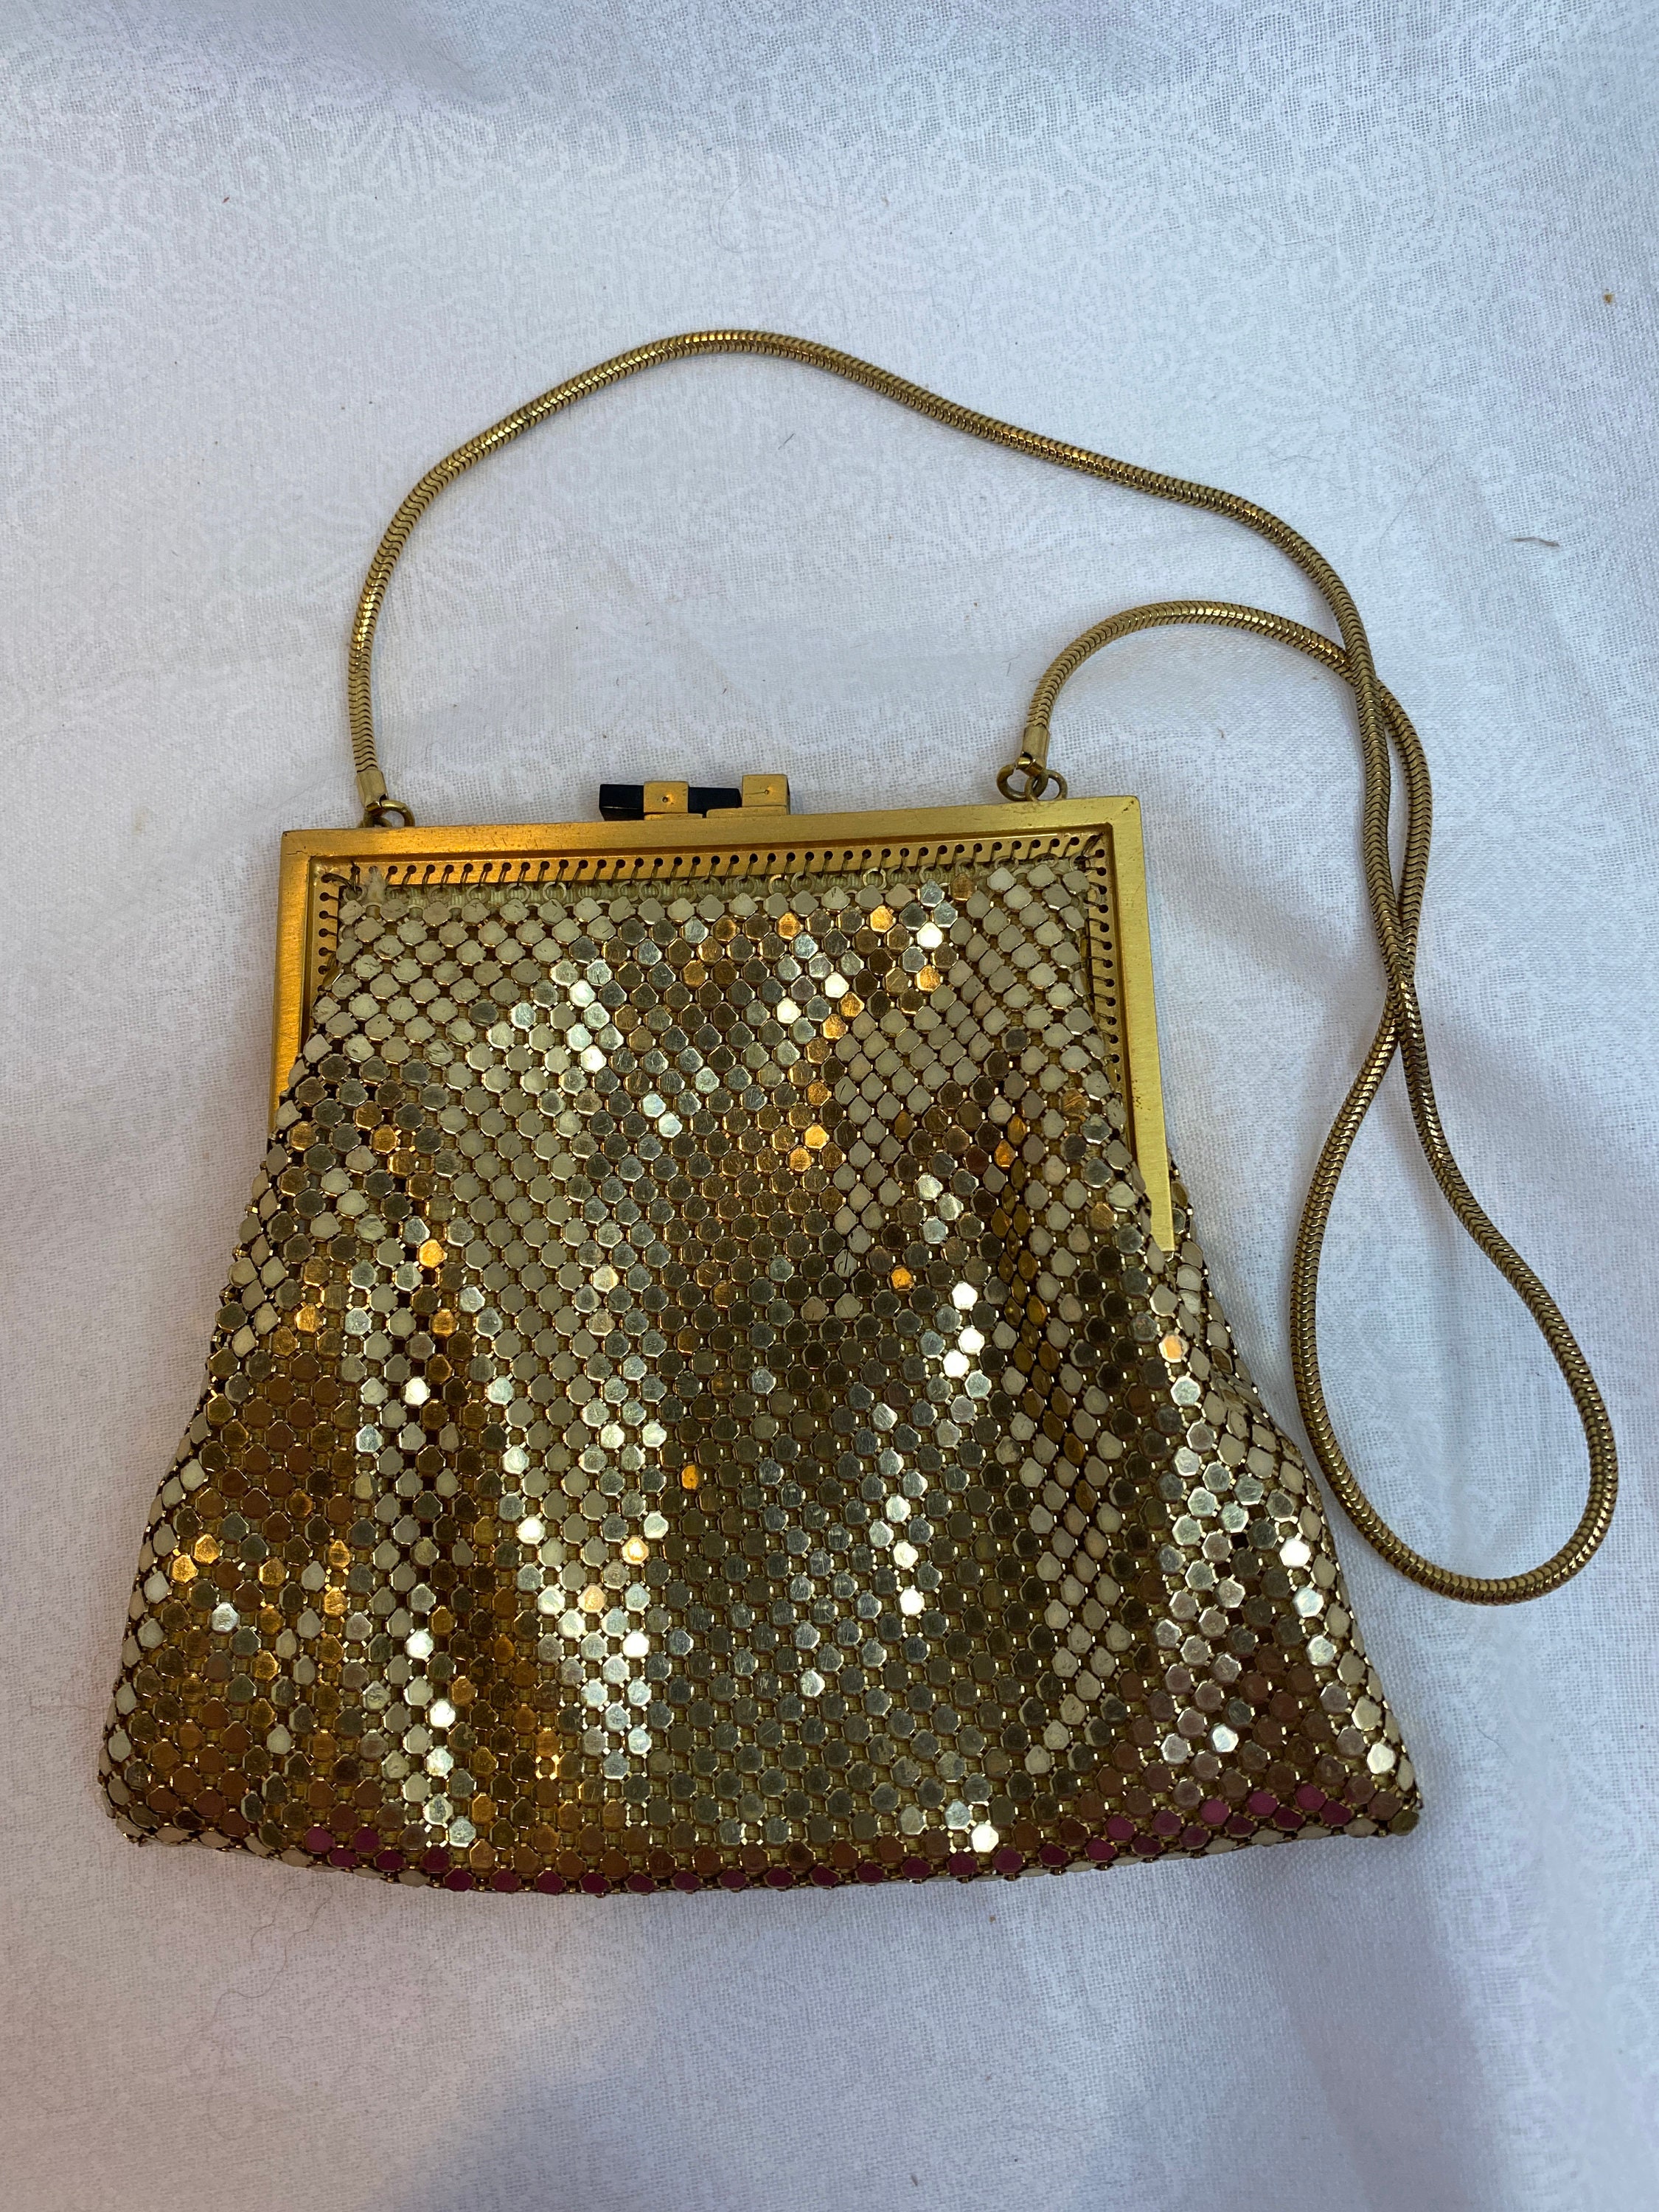 Stunning Gold Mesh Purse / Handbag with Rhinestones | Etsy